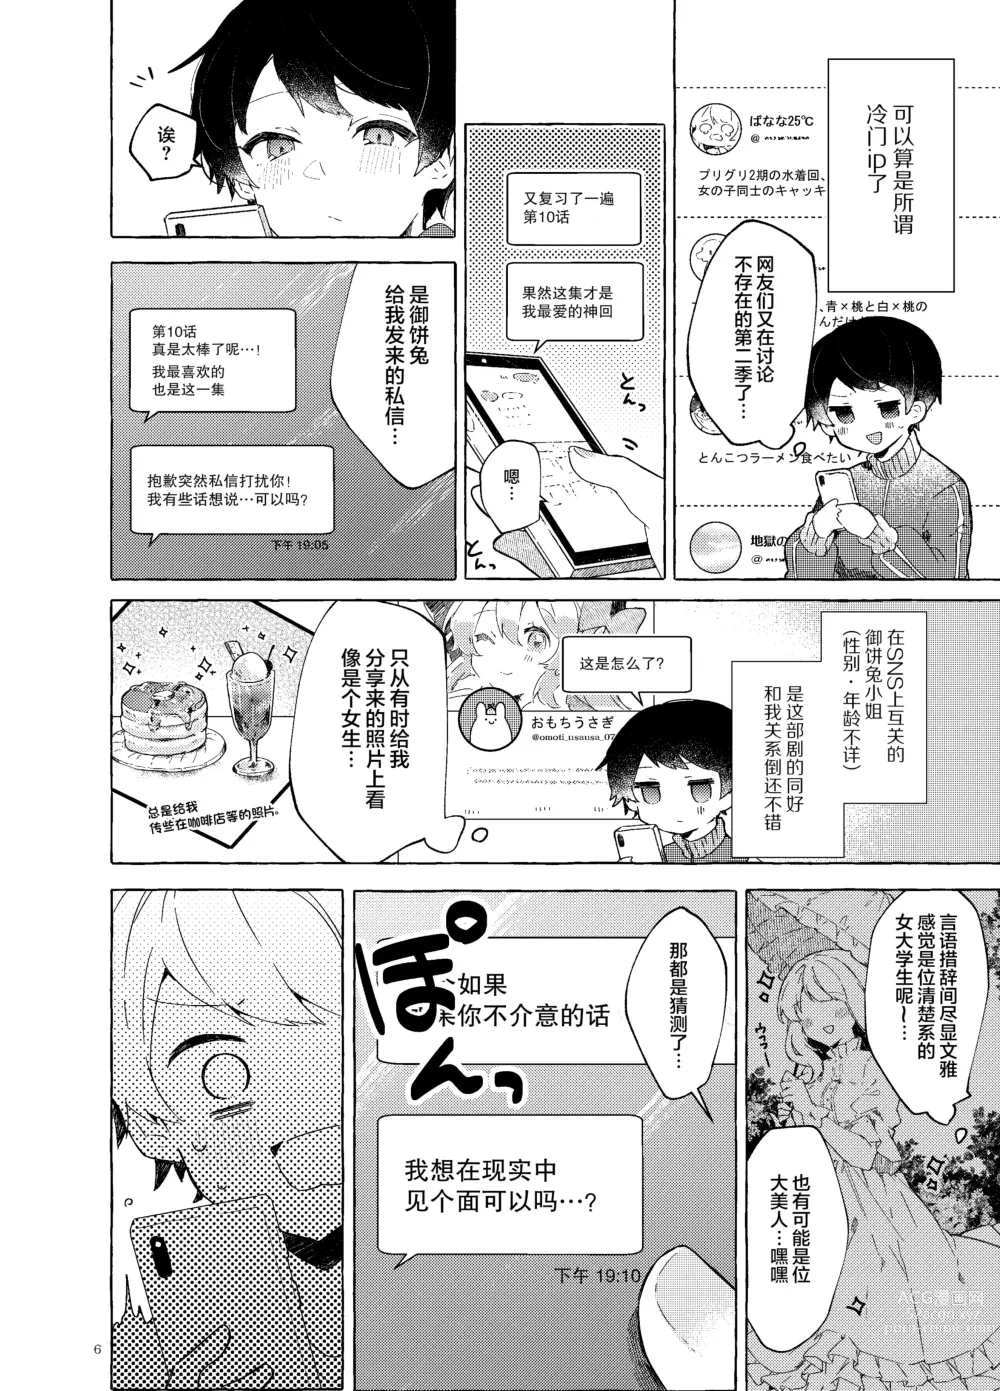 Page 8 of doujinshi Koi to Mahou to Etcetera - Love, Magic, and etc.